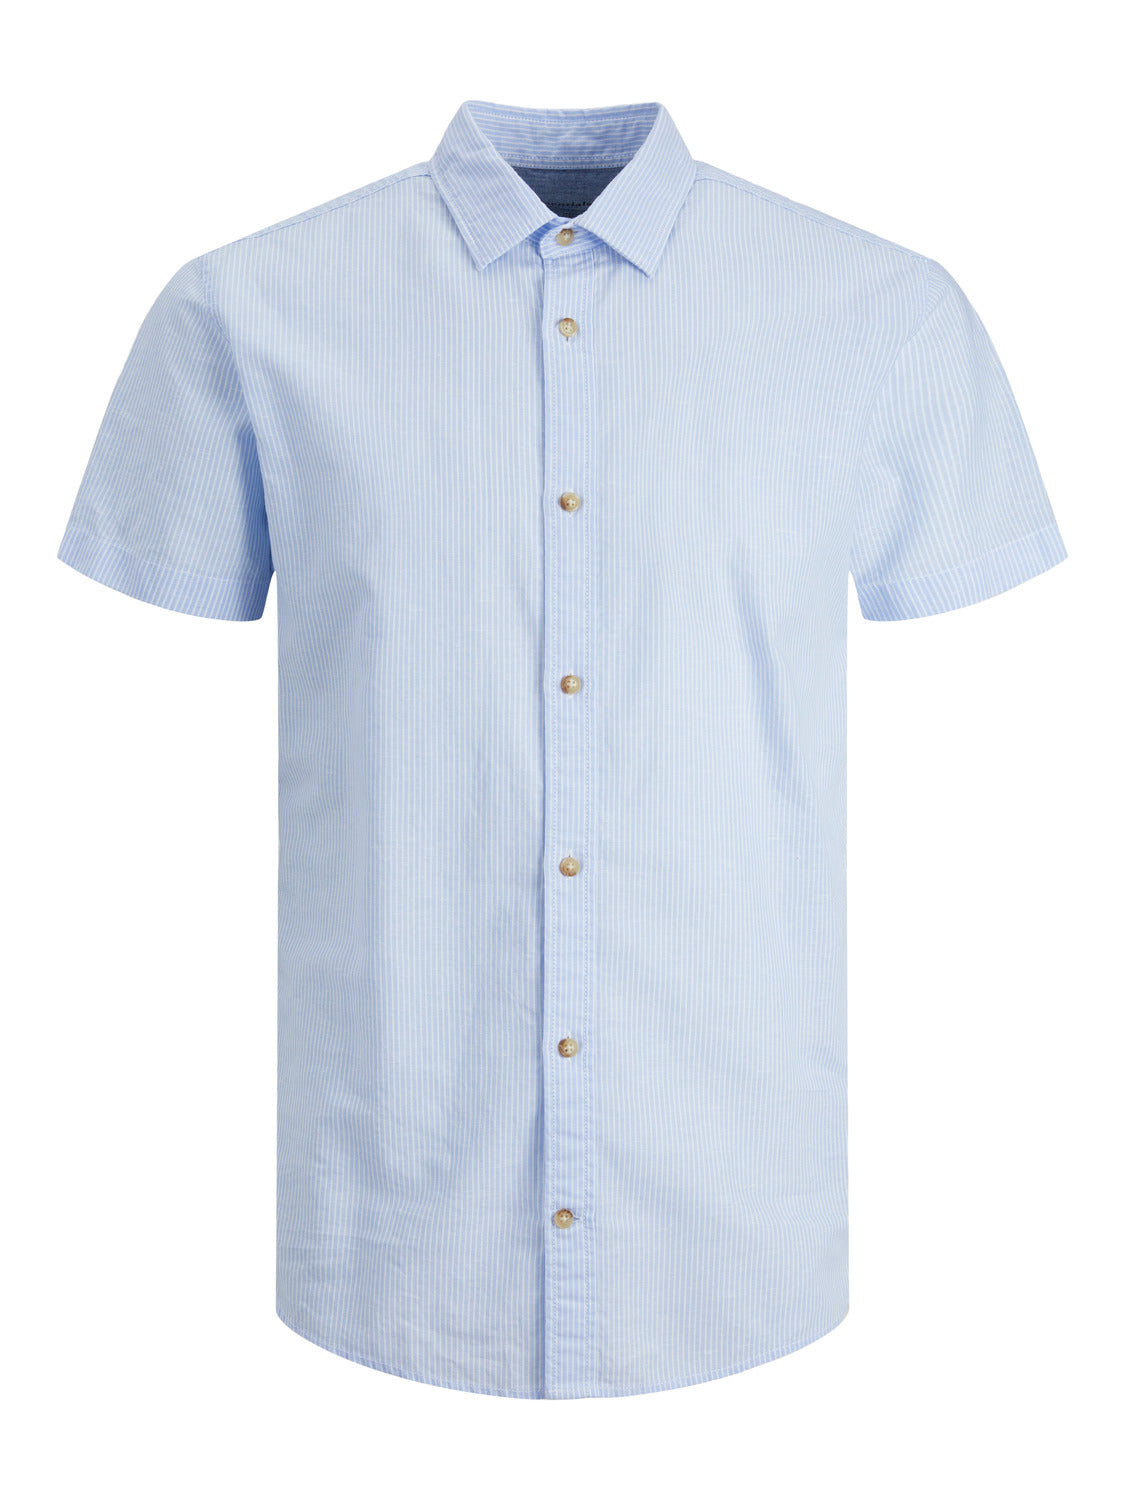 JJESUMMER Shirts - Cashmere Blue